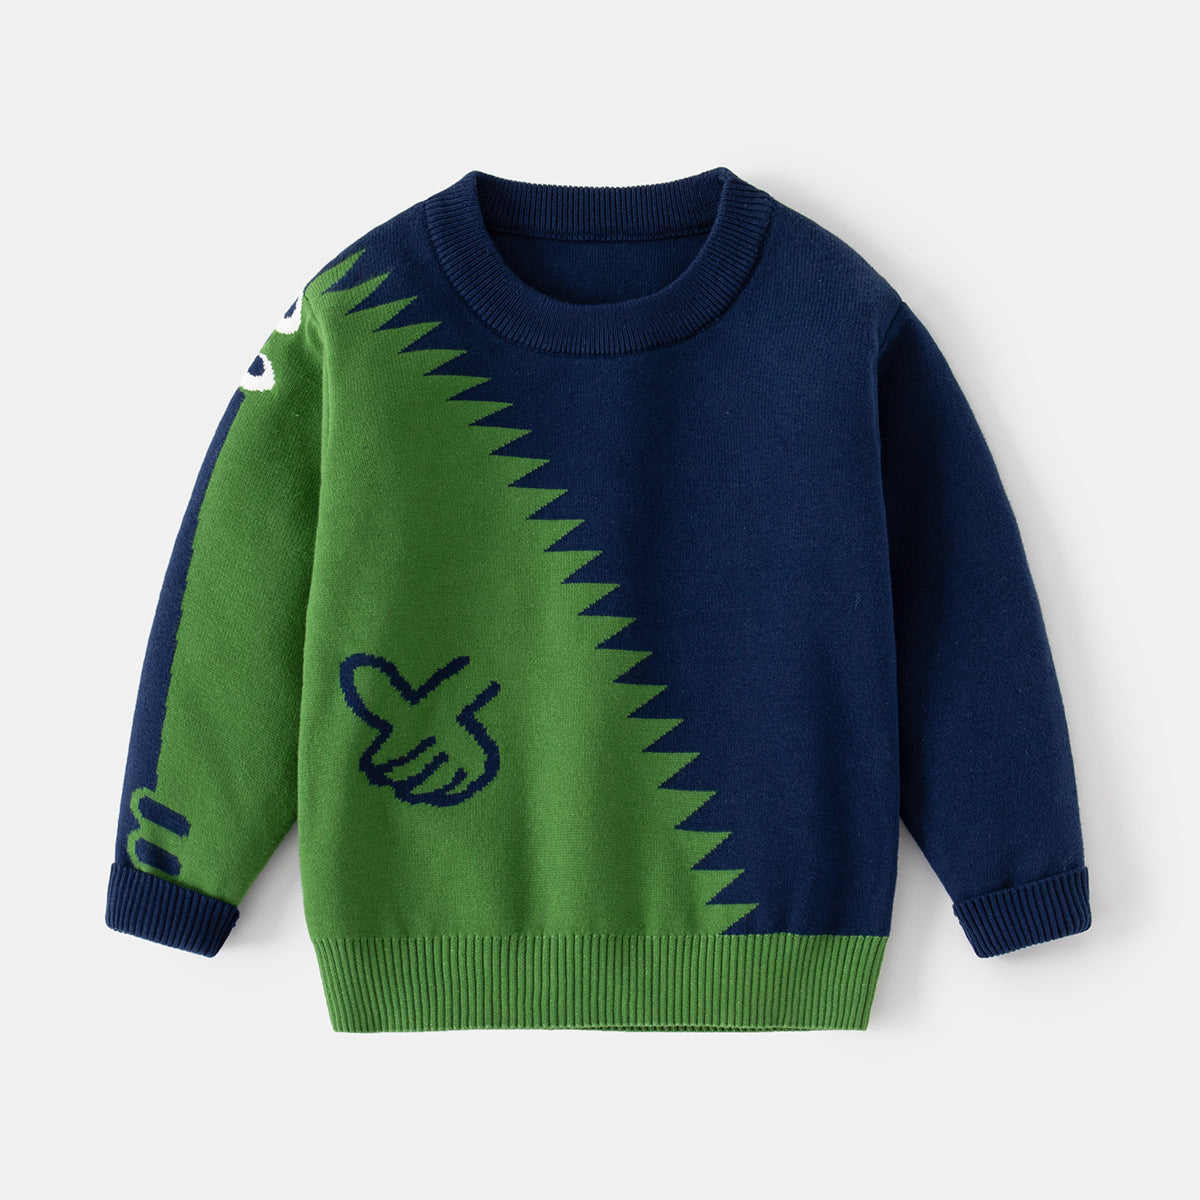 [513638] - Atasan Sweater Crewneck Lengan Panjang Import Anak Laki-Laki - Motif Dino Okay